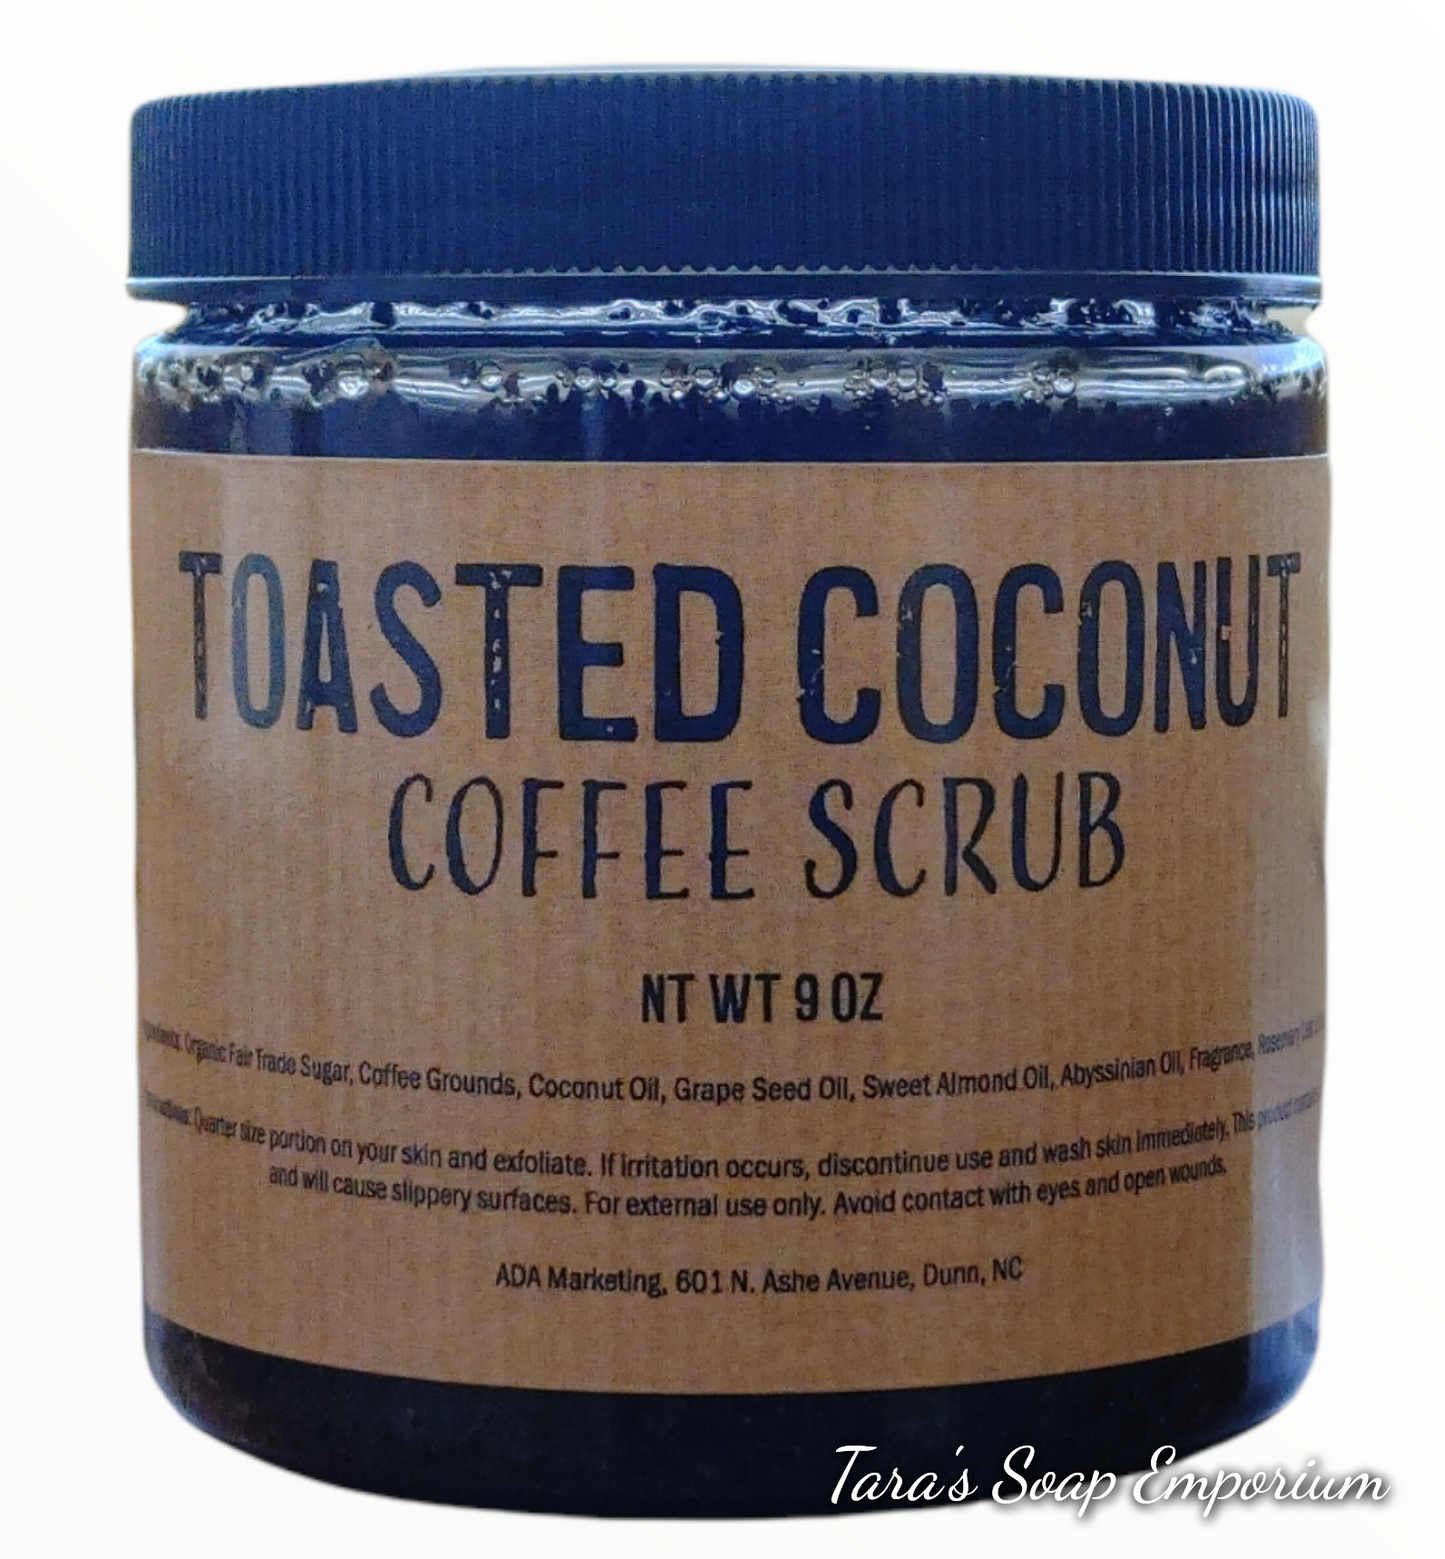 Toasted Coconut Coffee Scrub